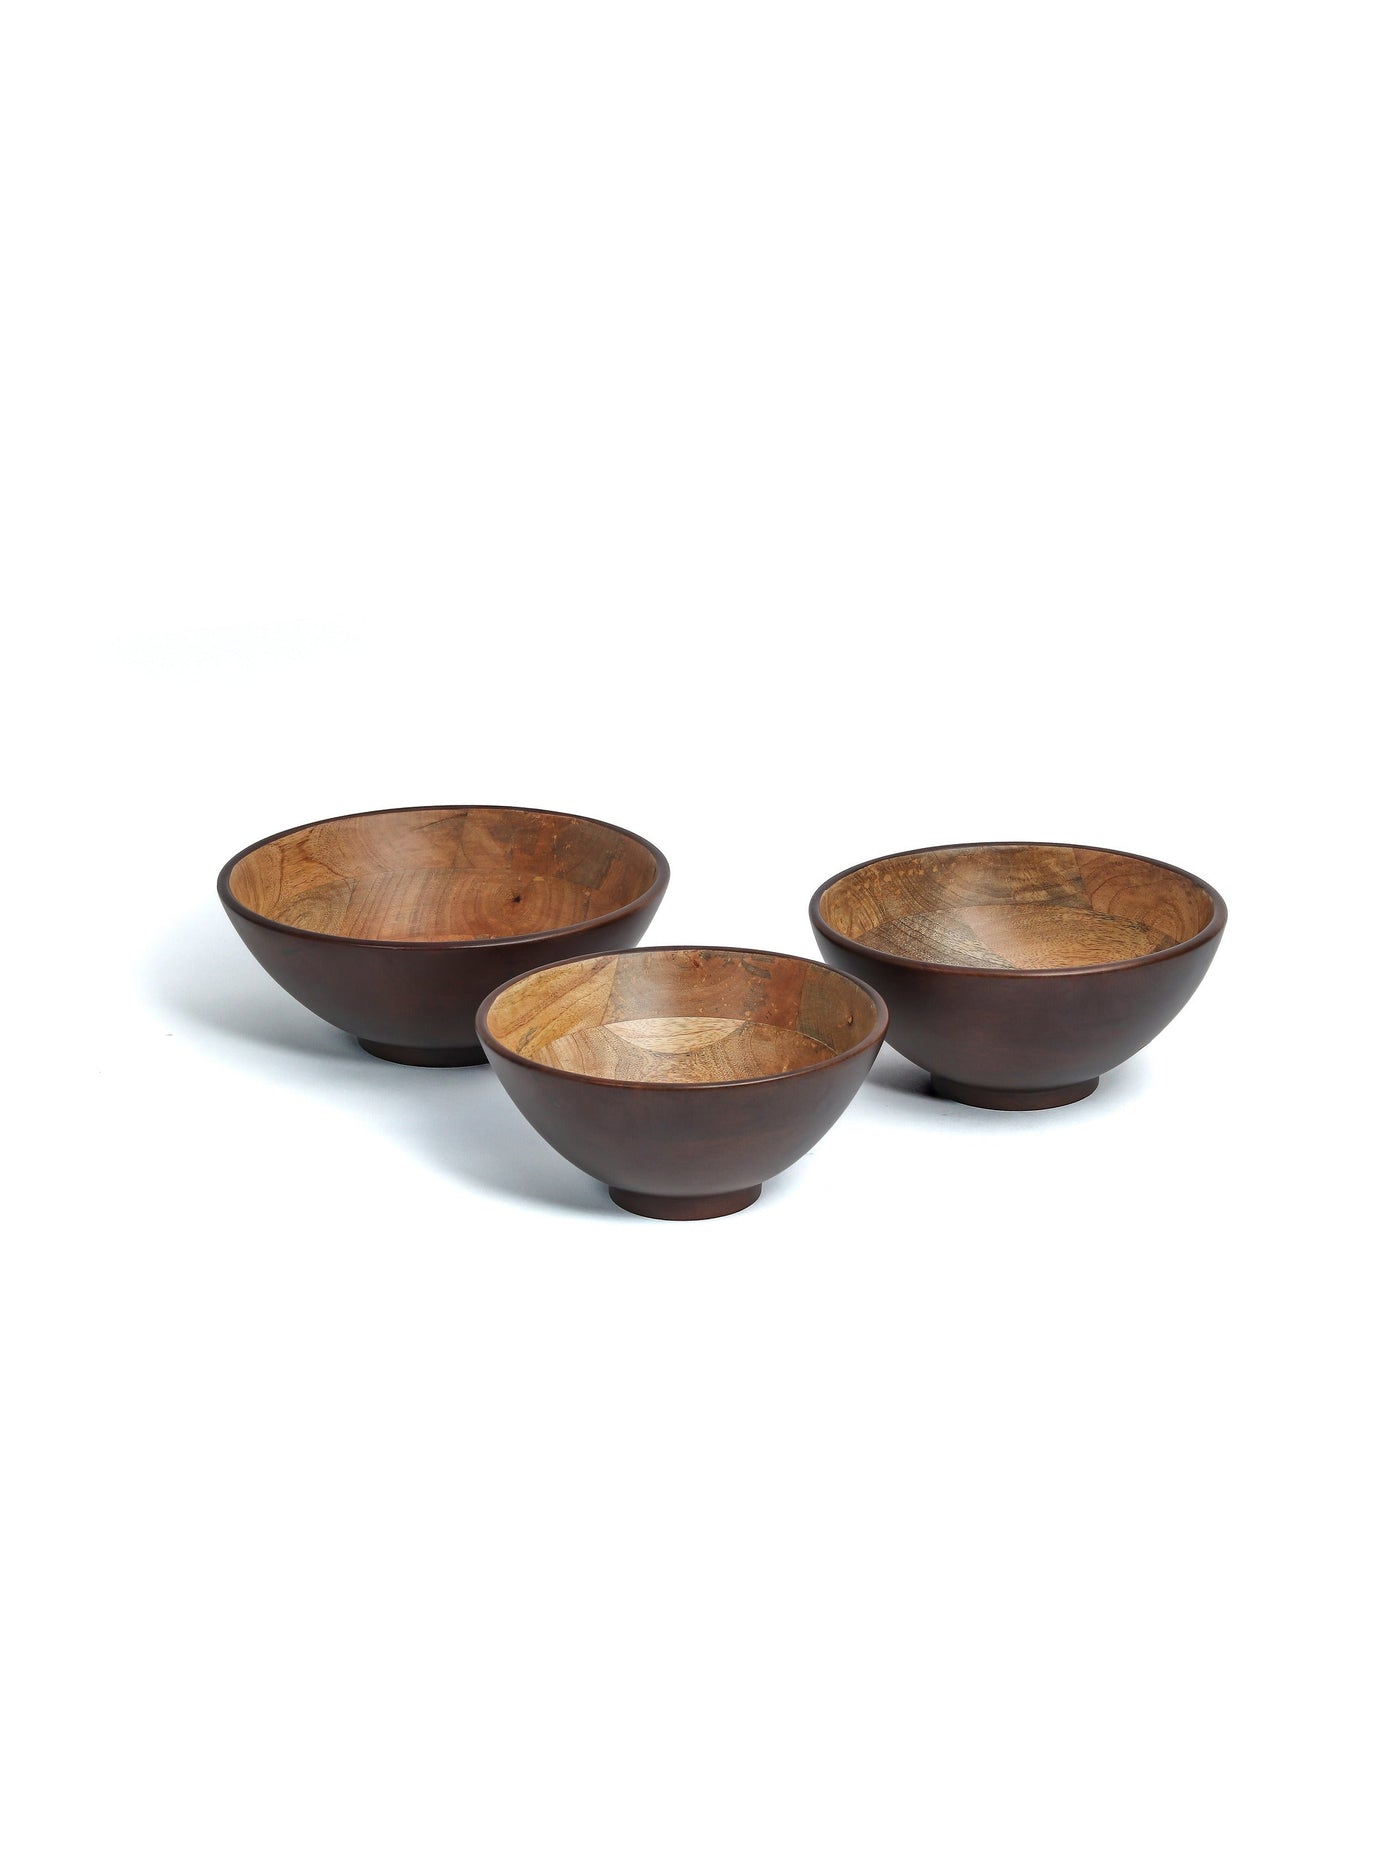 Indie cone bowls